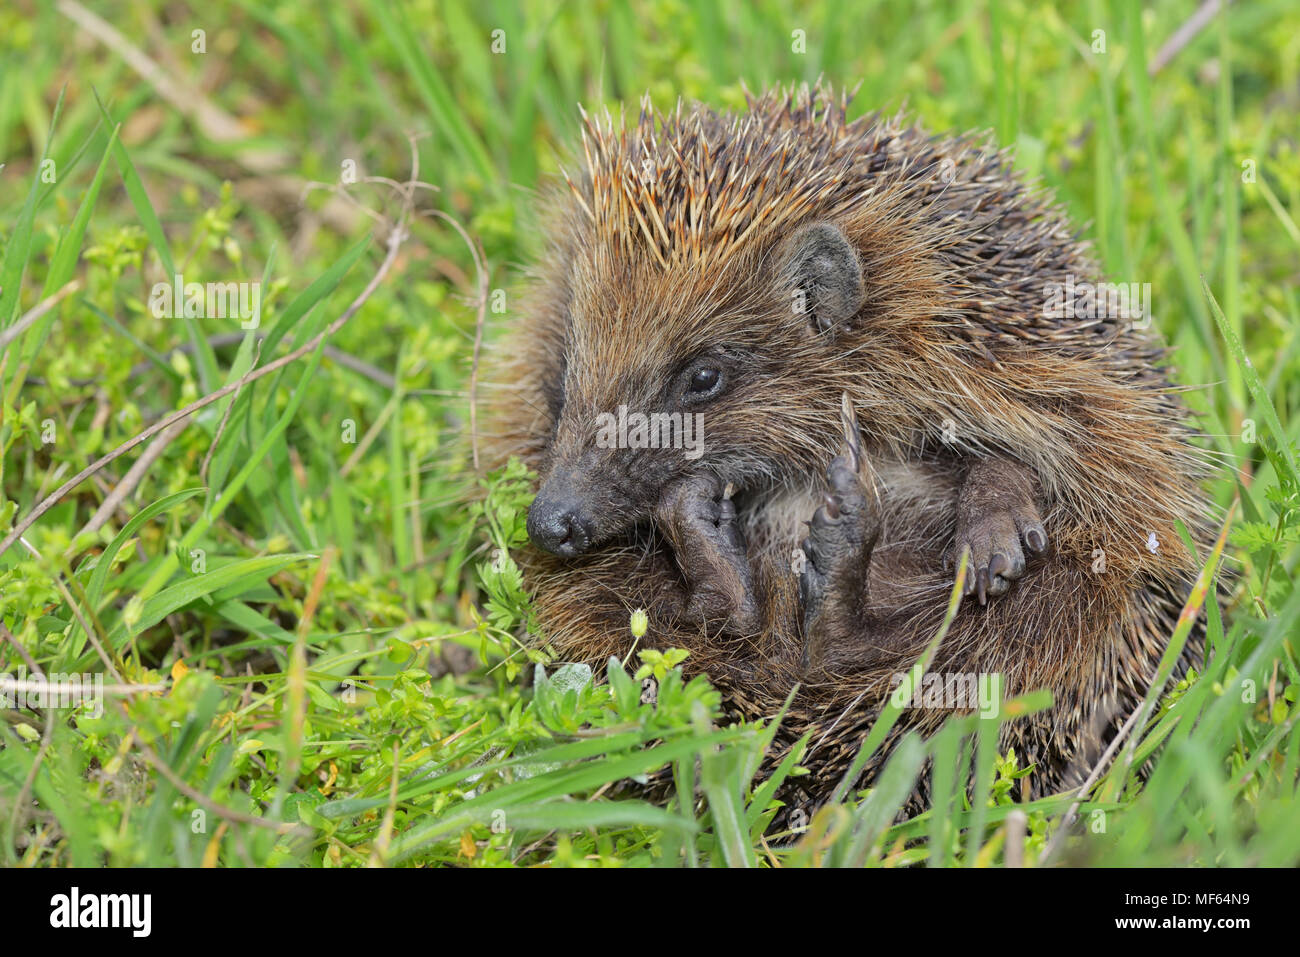 Jeune européen hedgehog in grass Banque D'Images